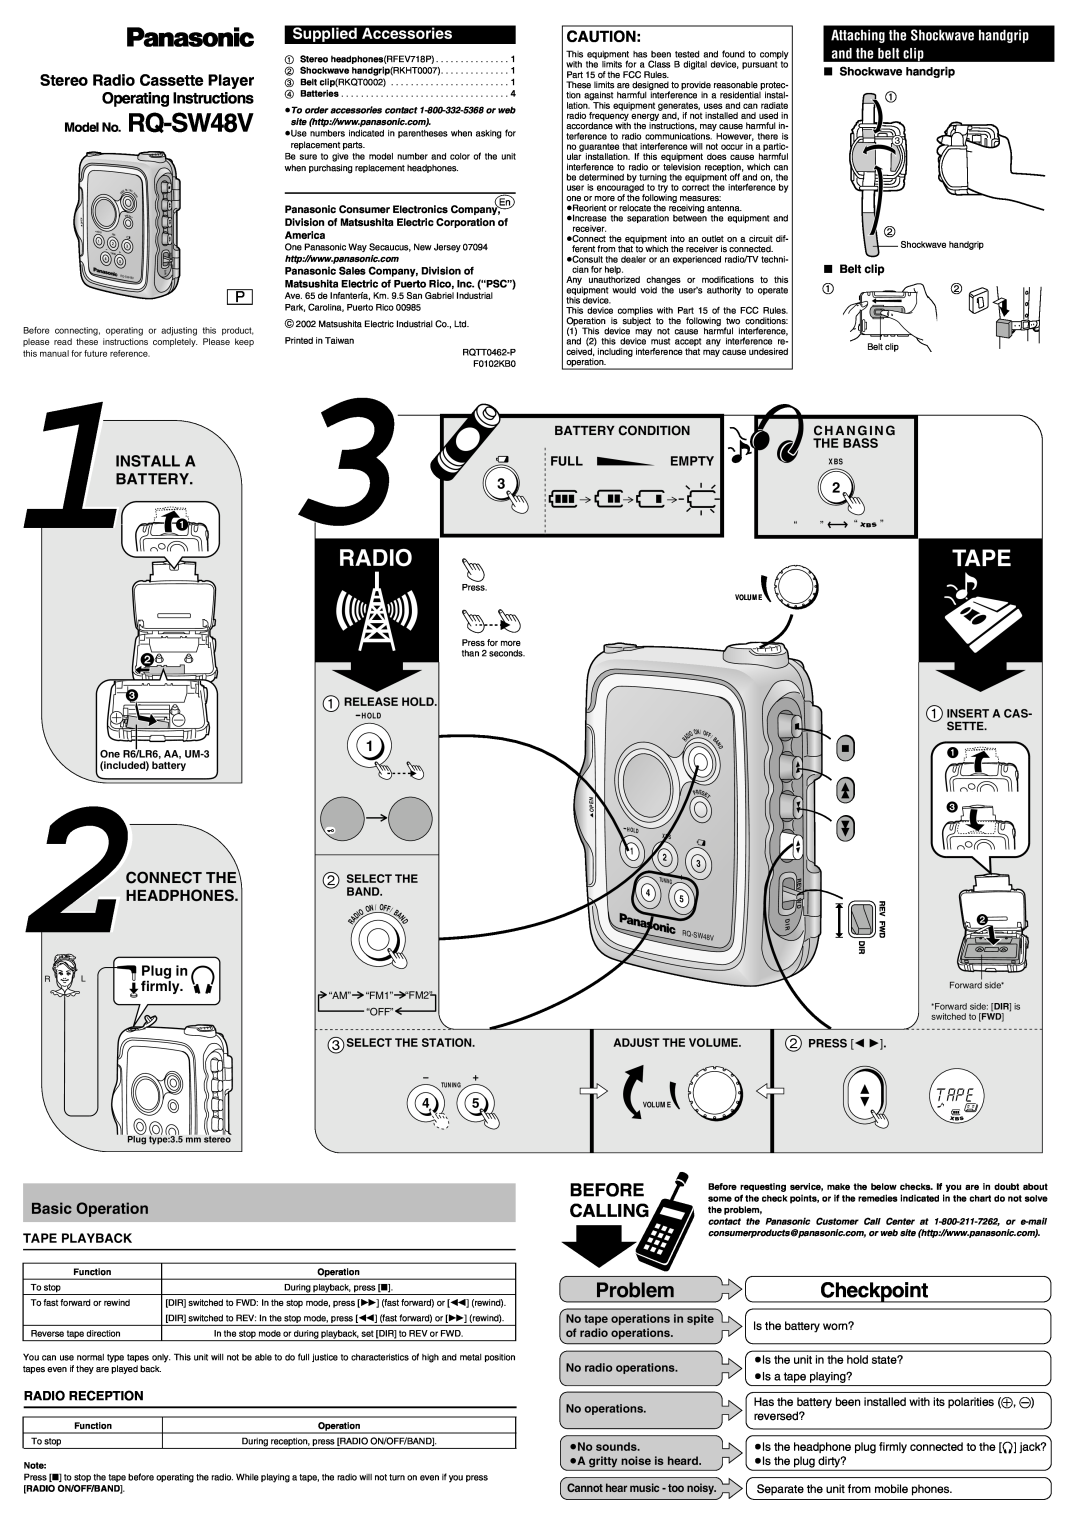 Panasonic manual Before, Calling, Basic Operation, Model No. RQ-SW48V, Battery Condition, The Bass, Full, Empty, Radio 